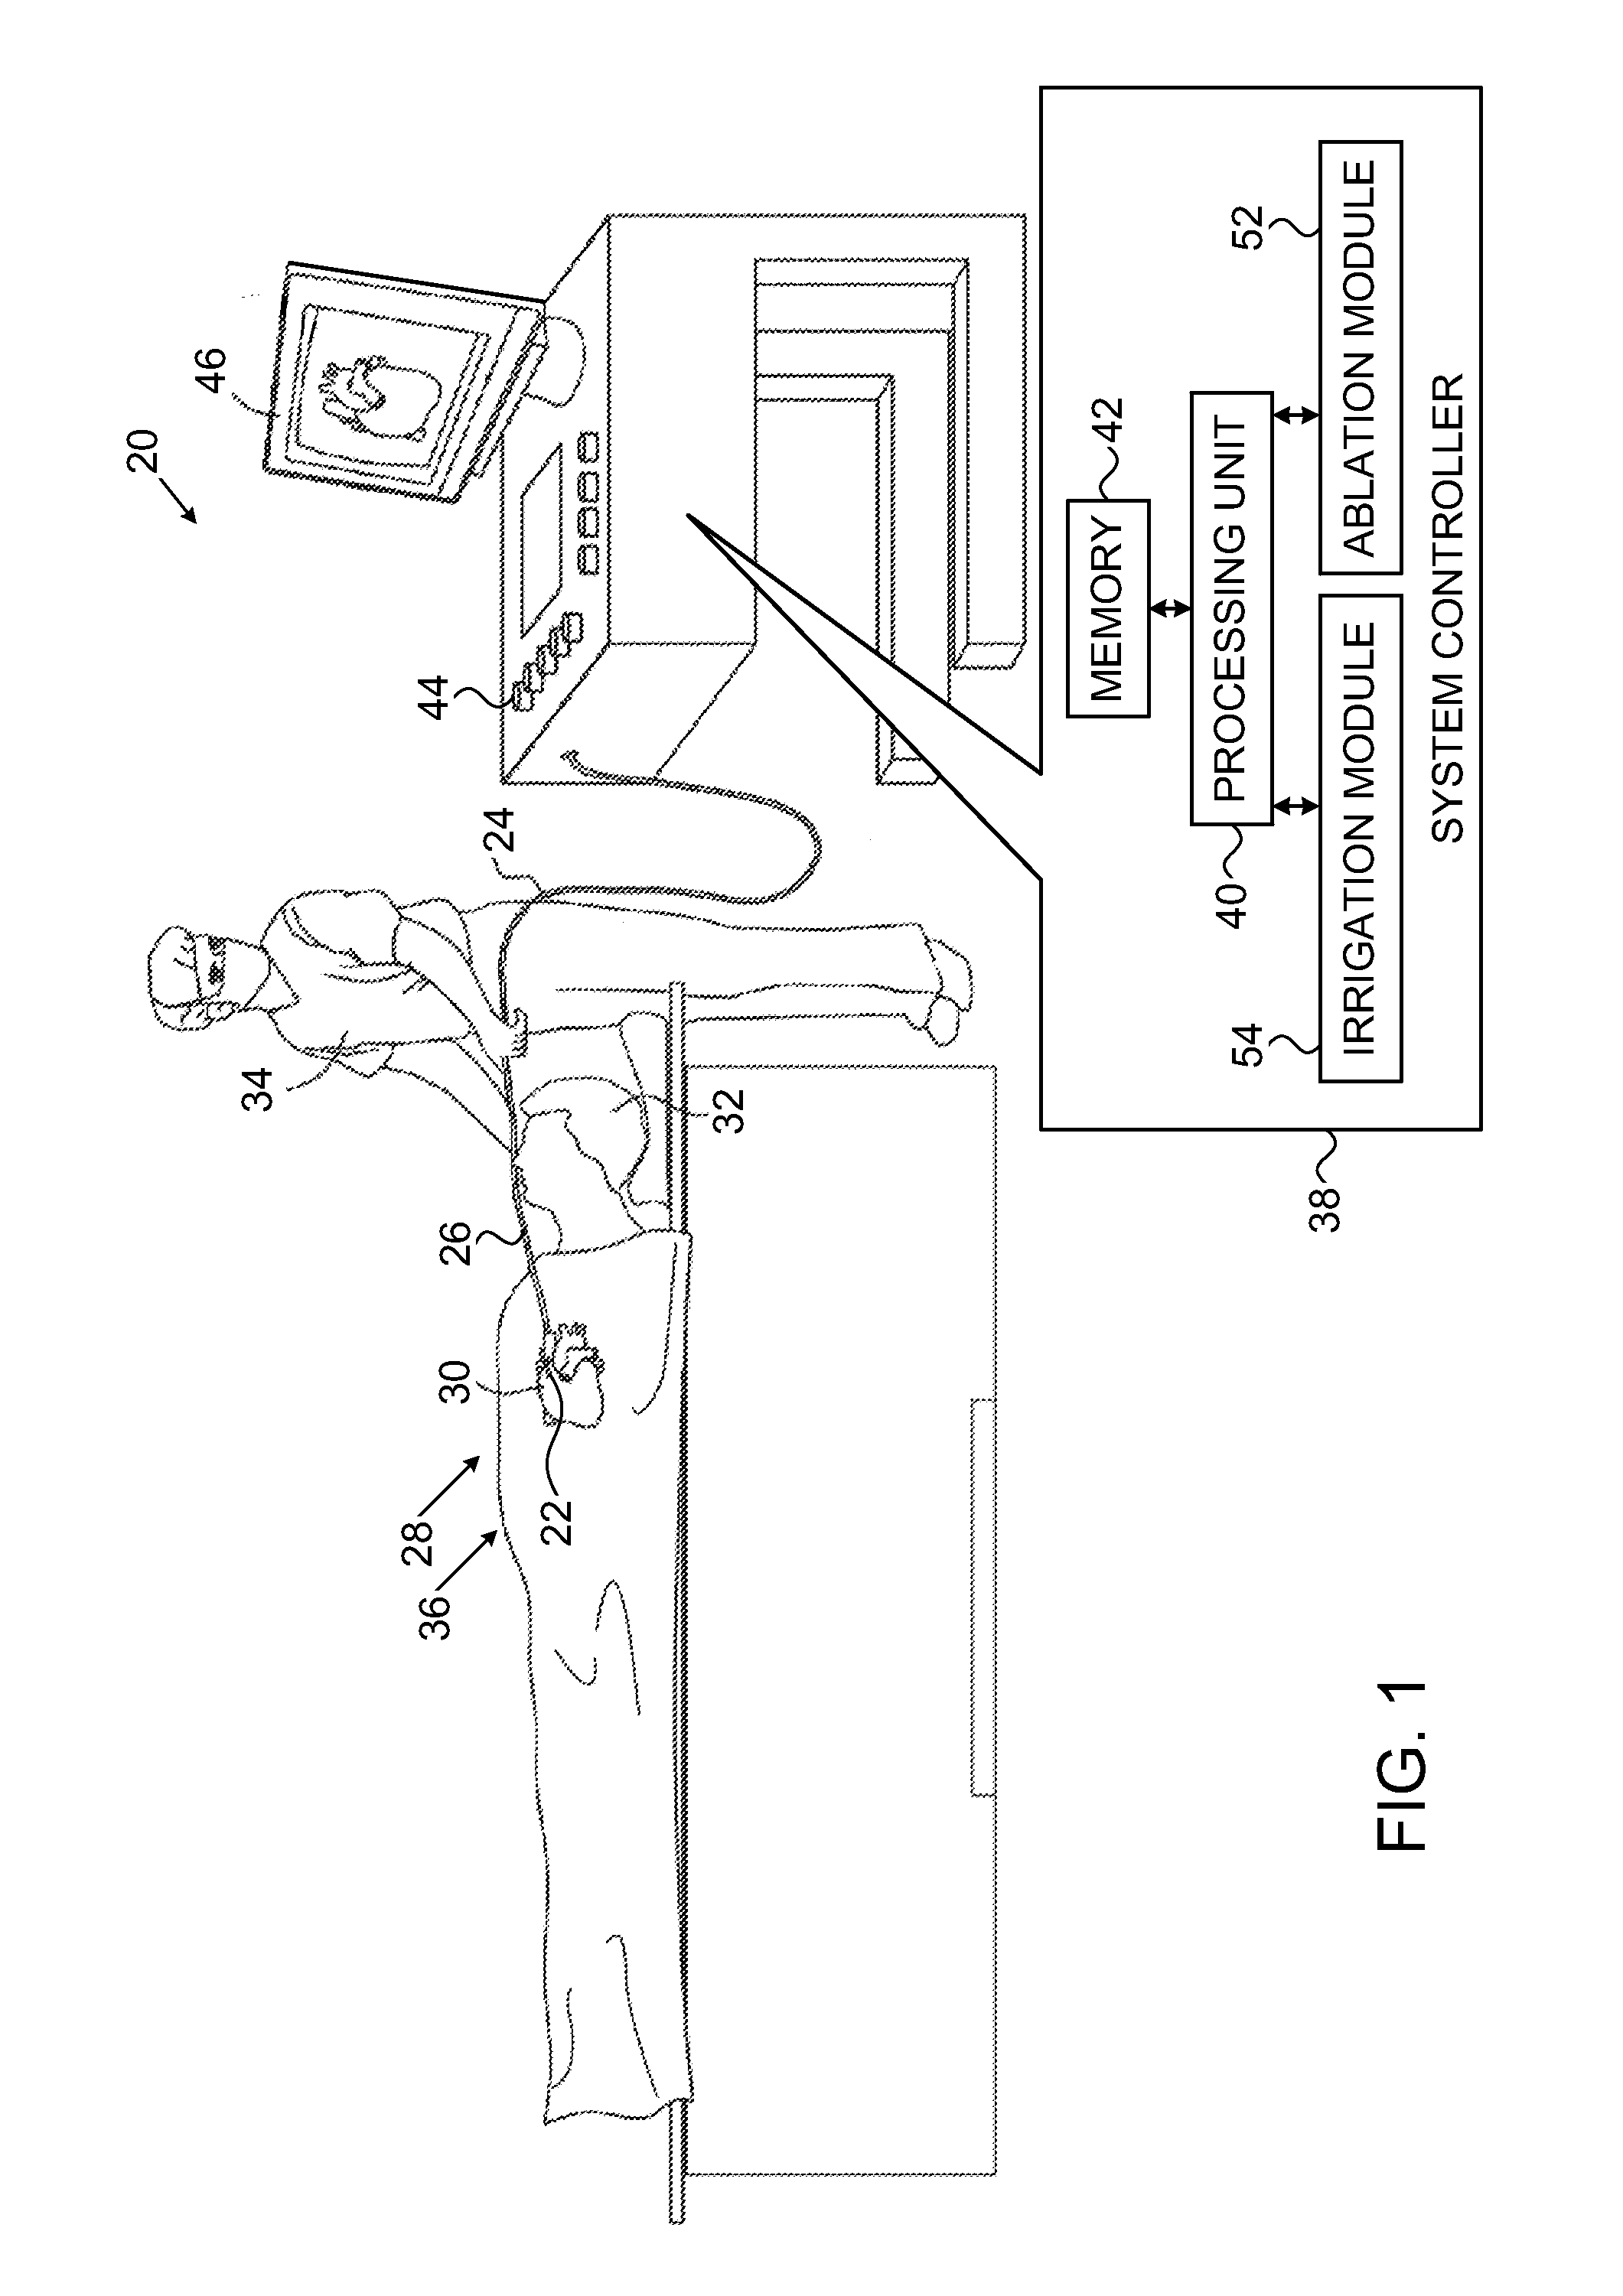 Catheter with spray irrigation